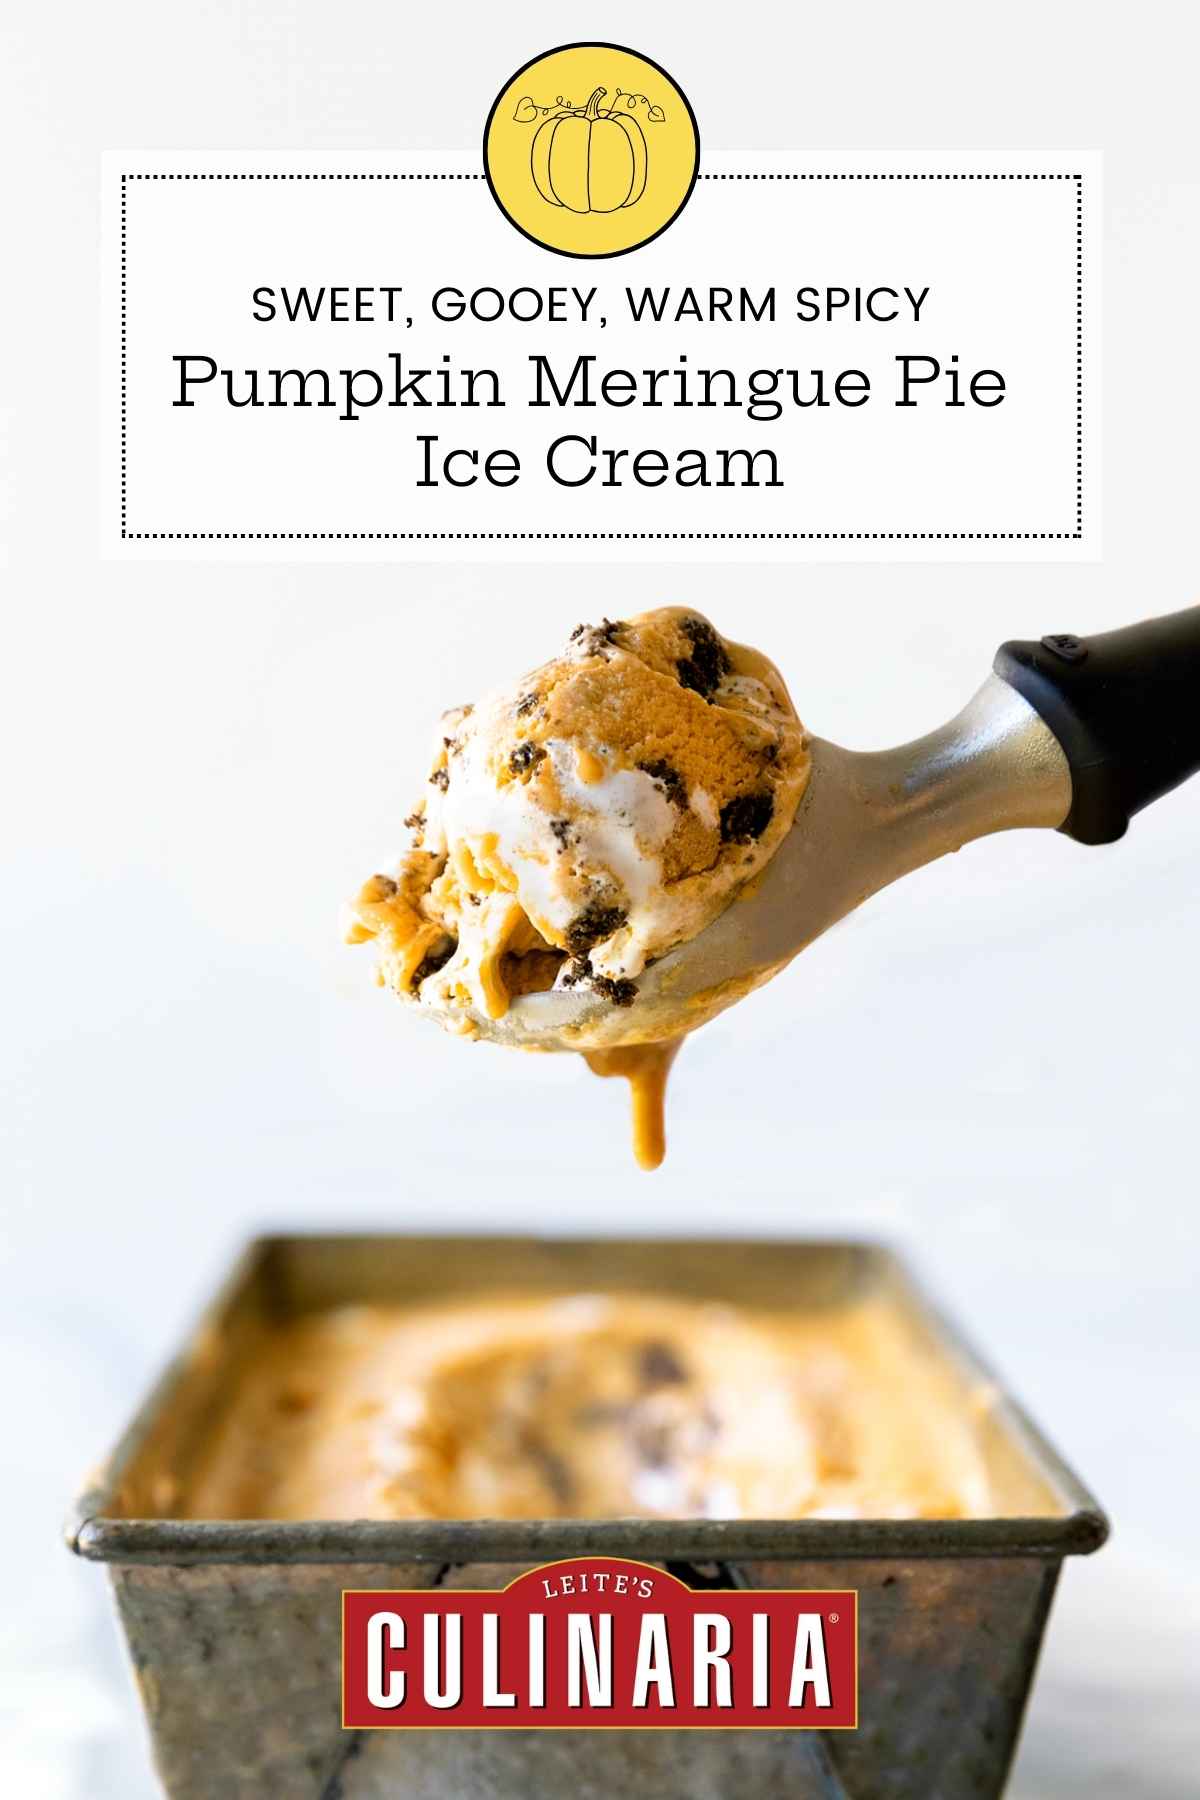 A container of Pumpkin Meringue Pie Ice Cream with a scoop.